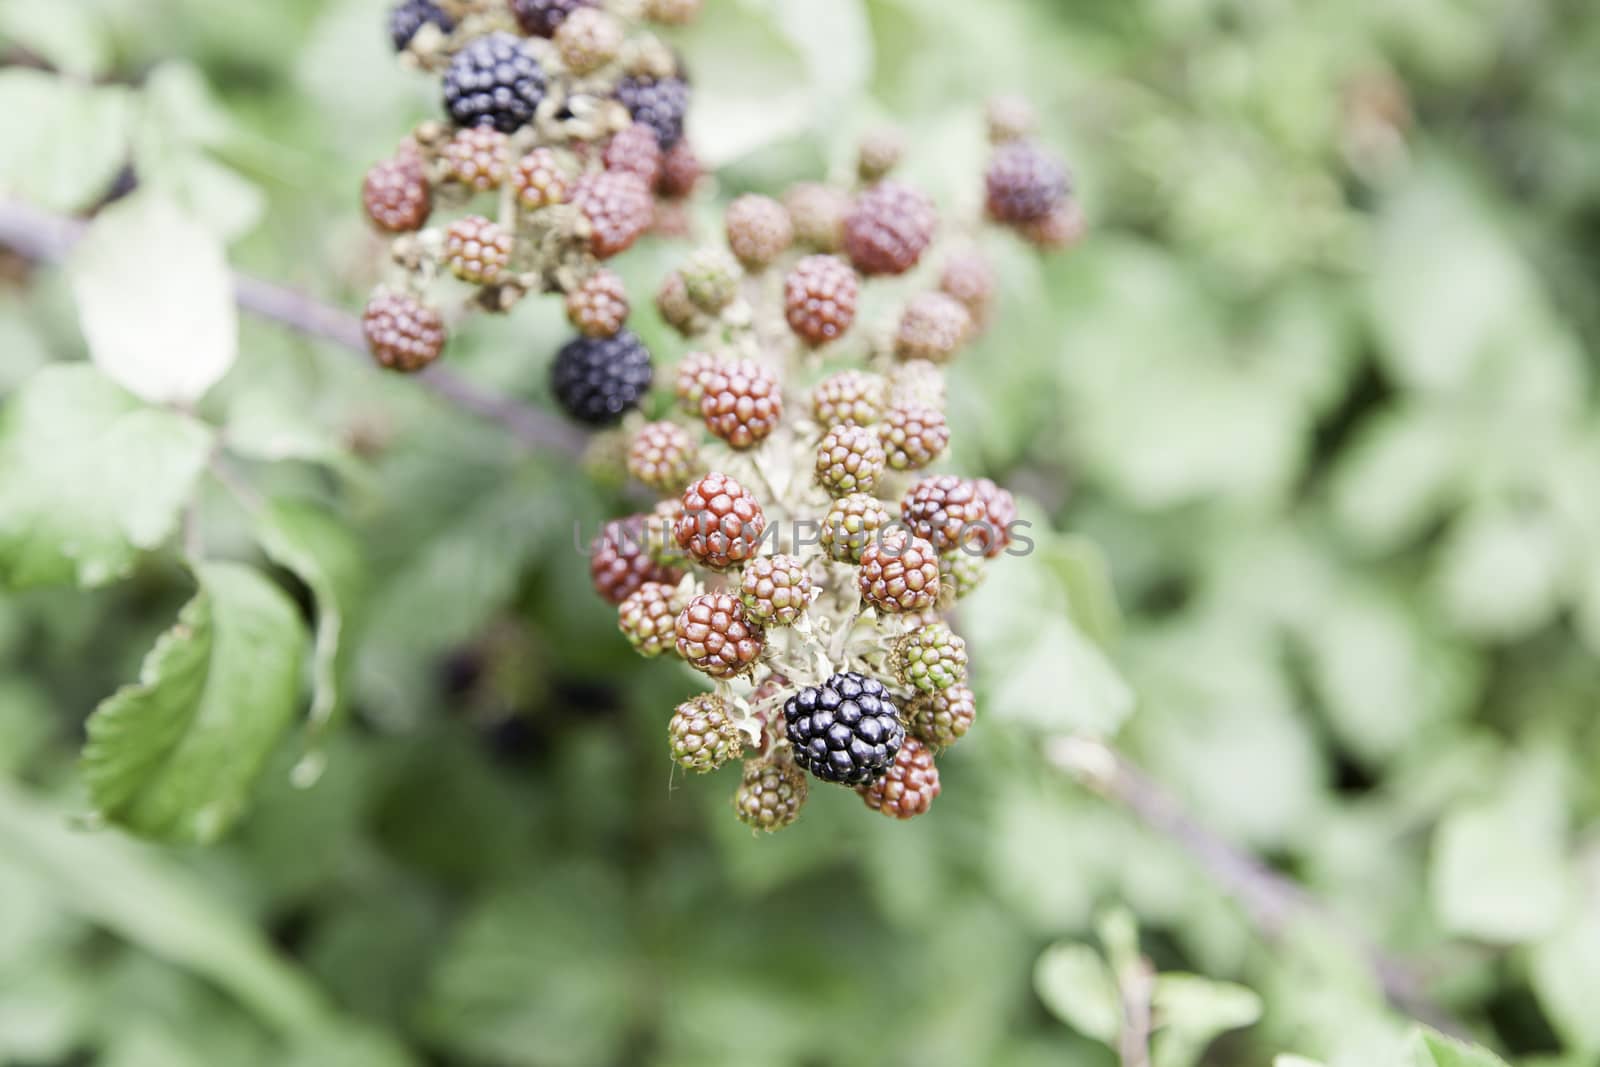 Wild blackberries in nature detail fresh fruit